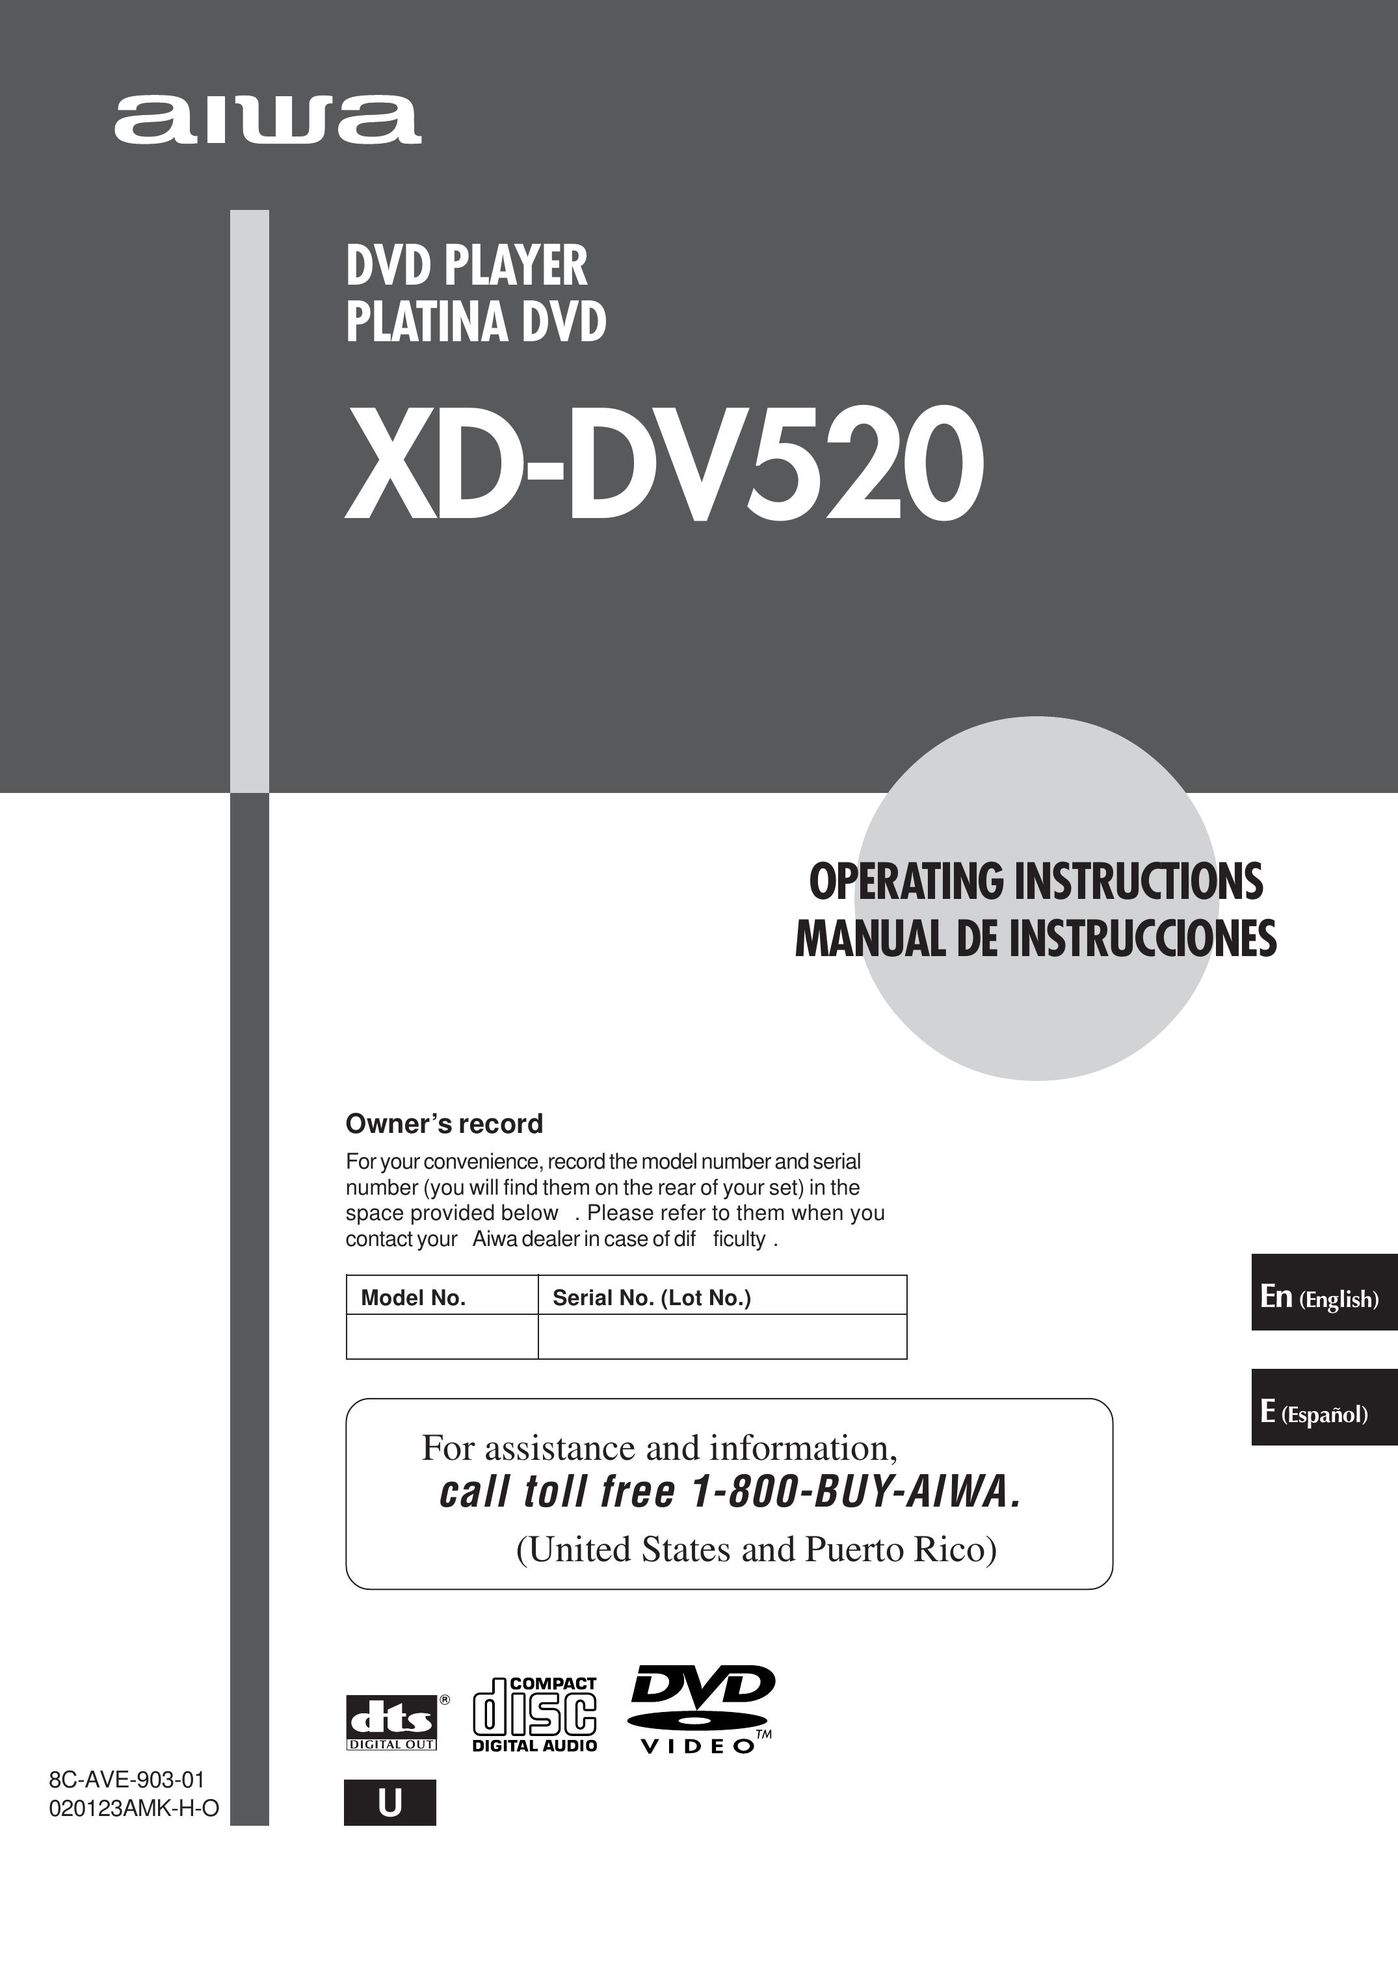 Aiwa XD-DV520 DVD Player User Manual